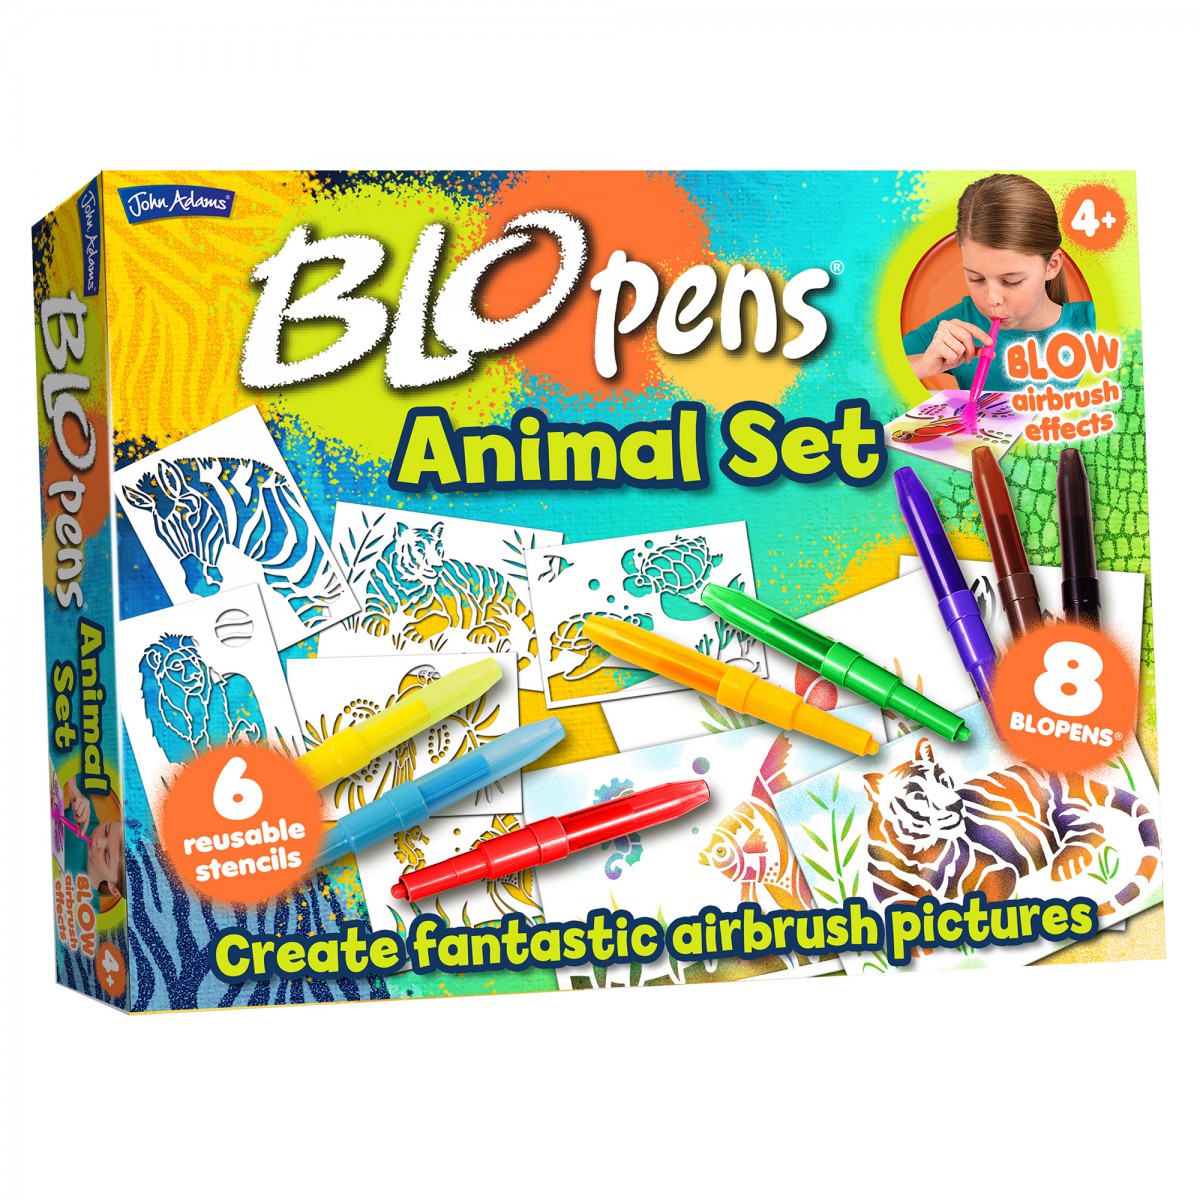 BLOPENS Activity Set - Animals